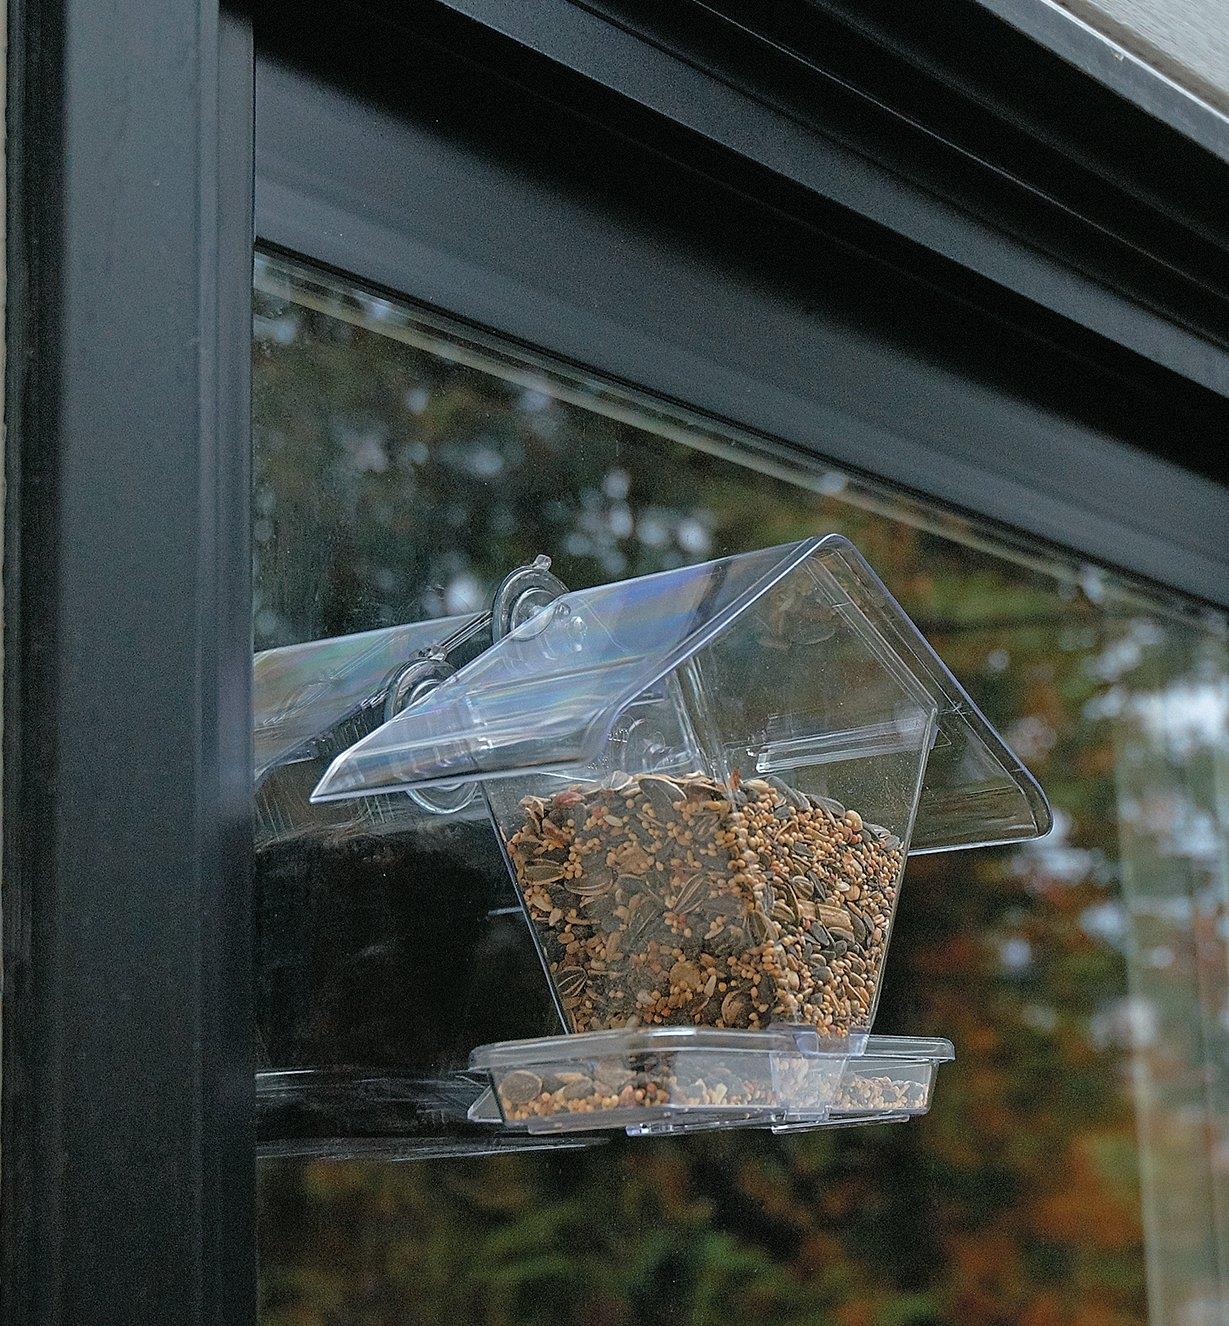 Outside view of Window Bird Feeder mounted on a window